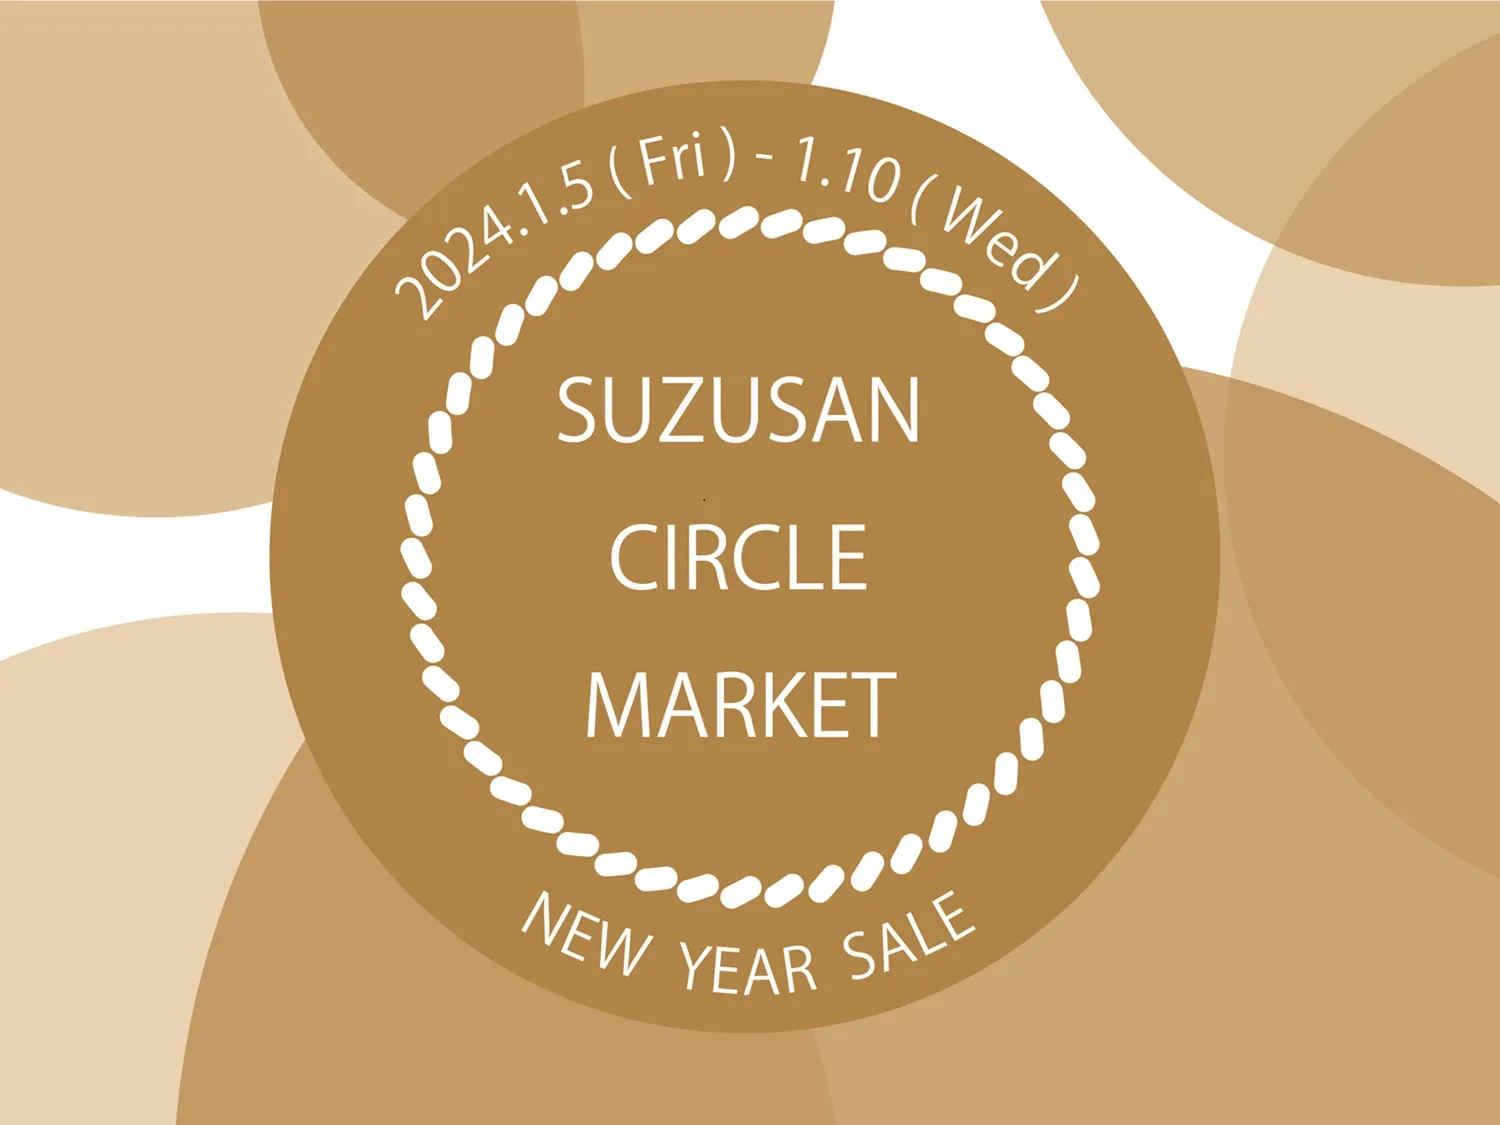 SUZUSAN CIRCLE MARKET